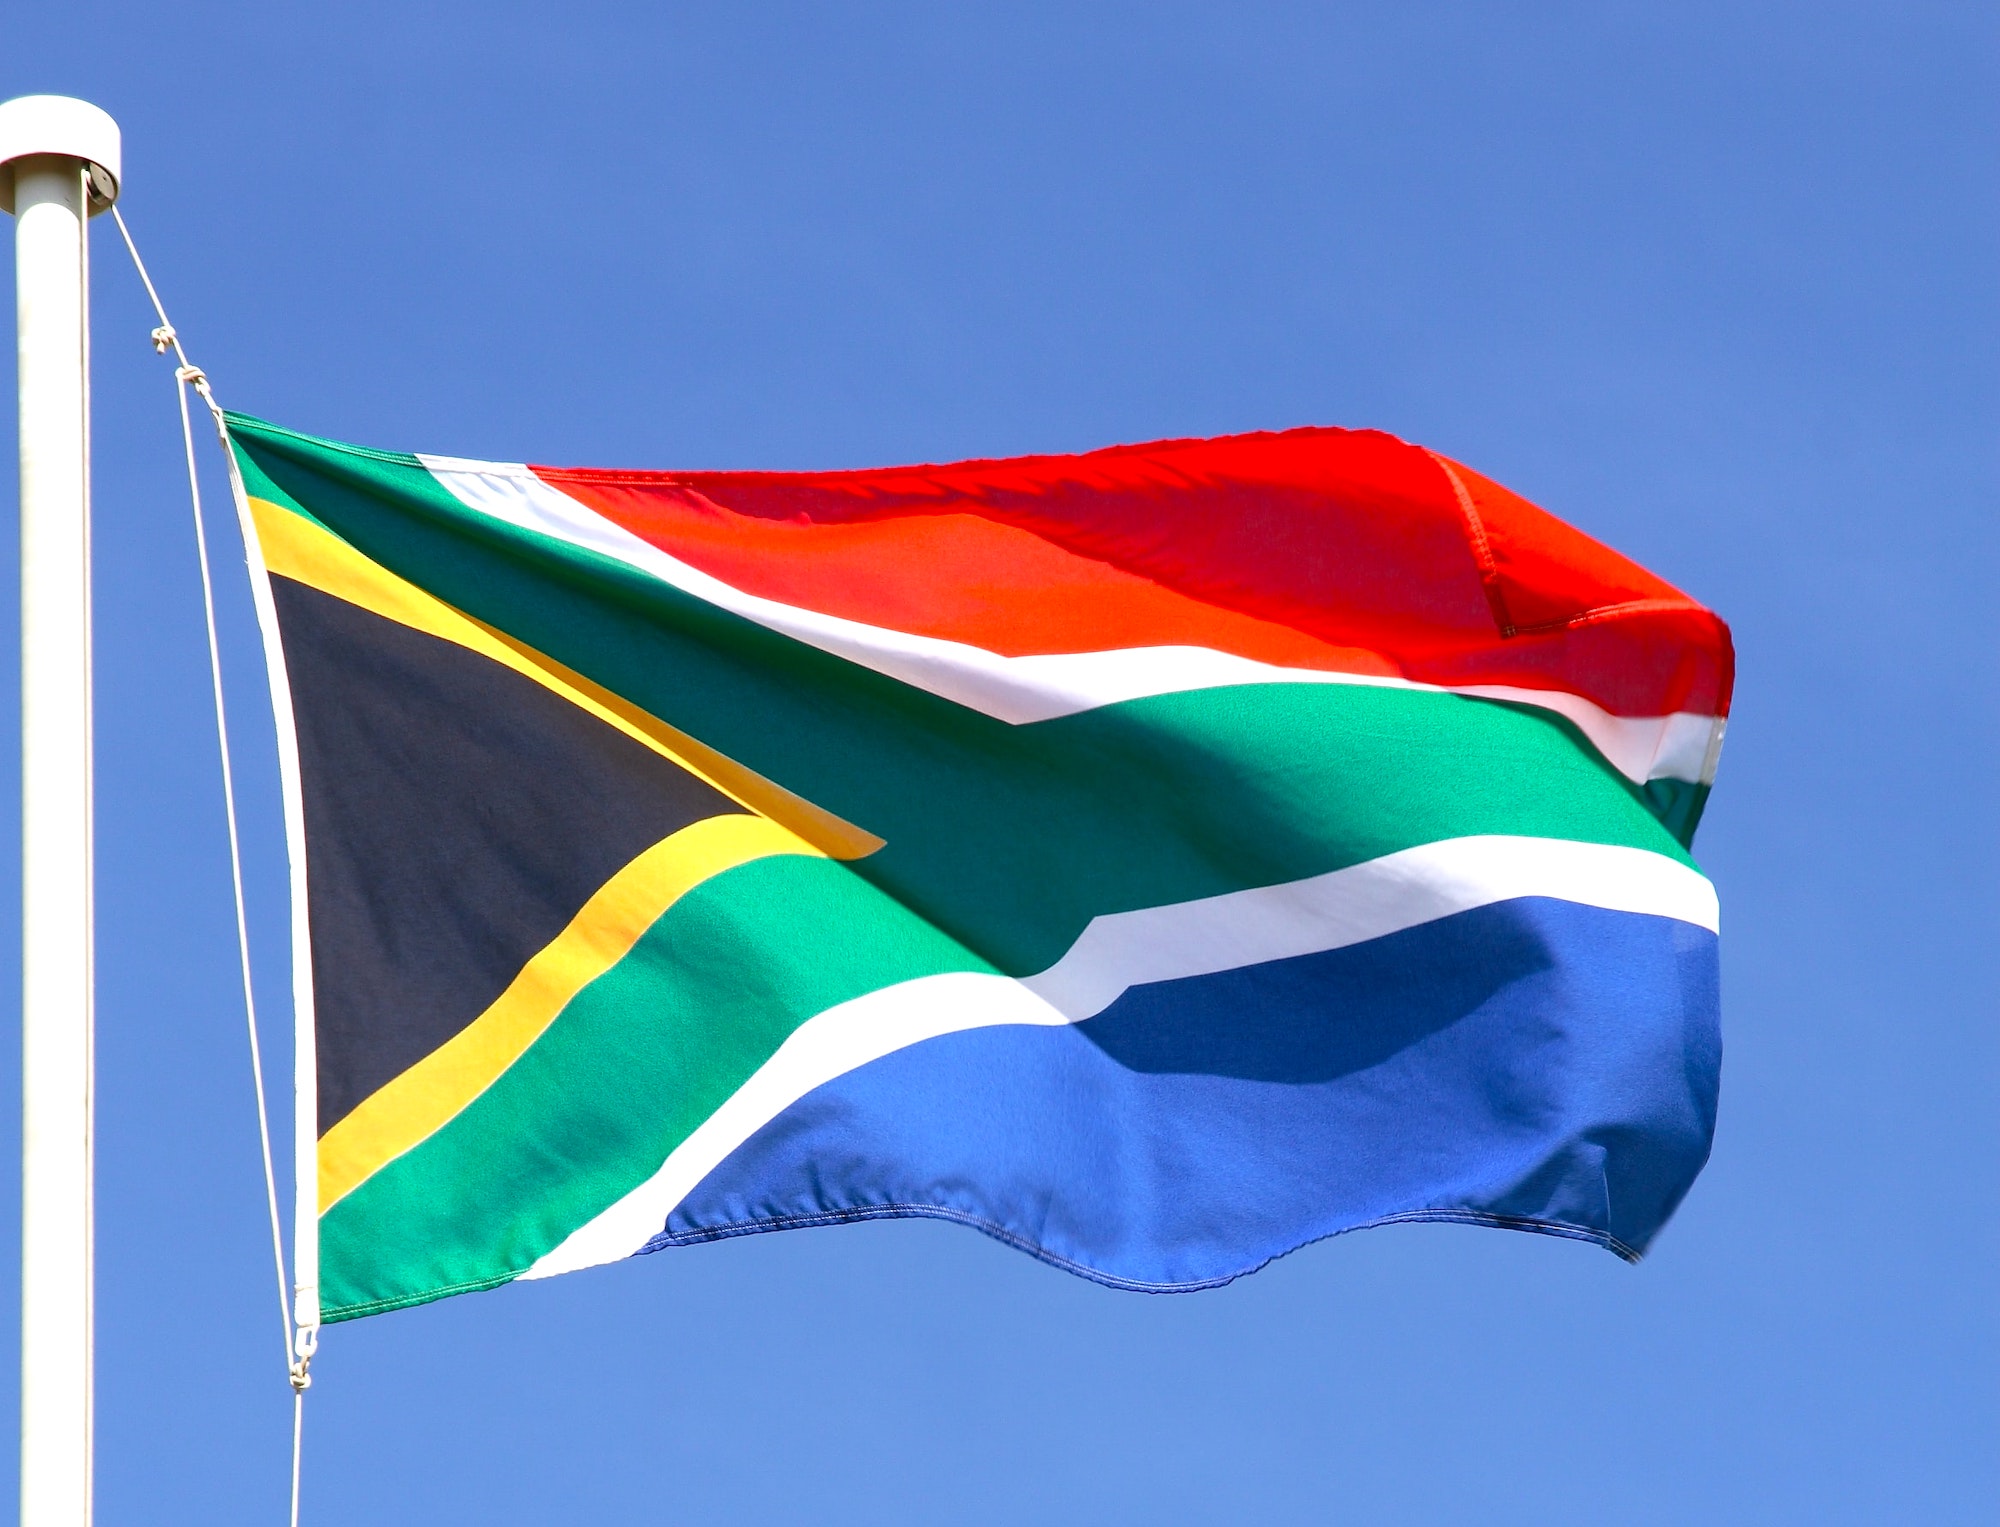 Bandera Sudáfrica